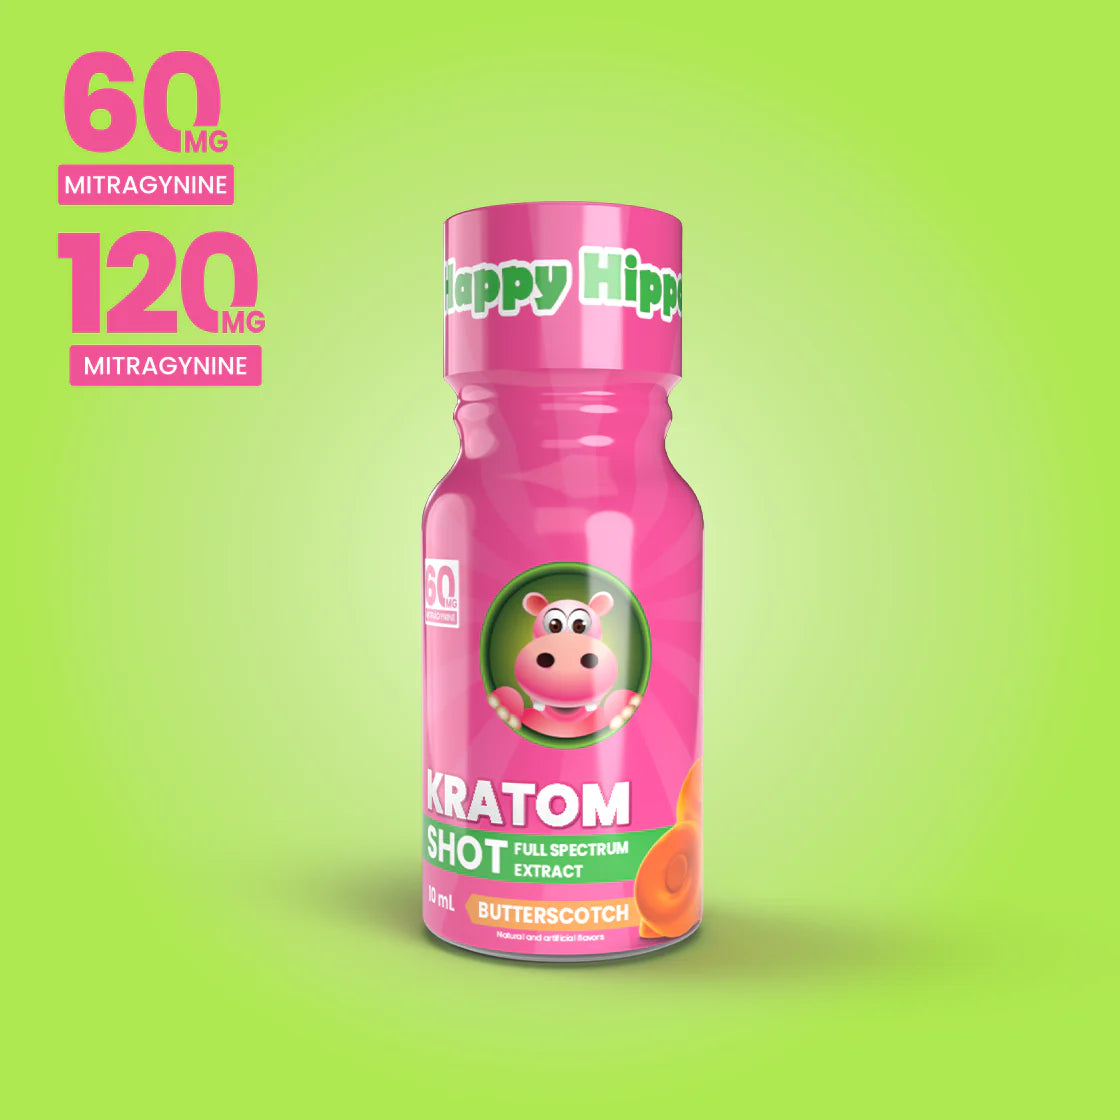 Happy Hippo Kratom Extract Shot Kratom Happy Hippo 60mg Butter Scotch 